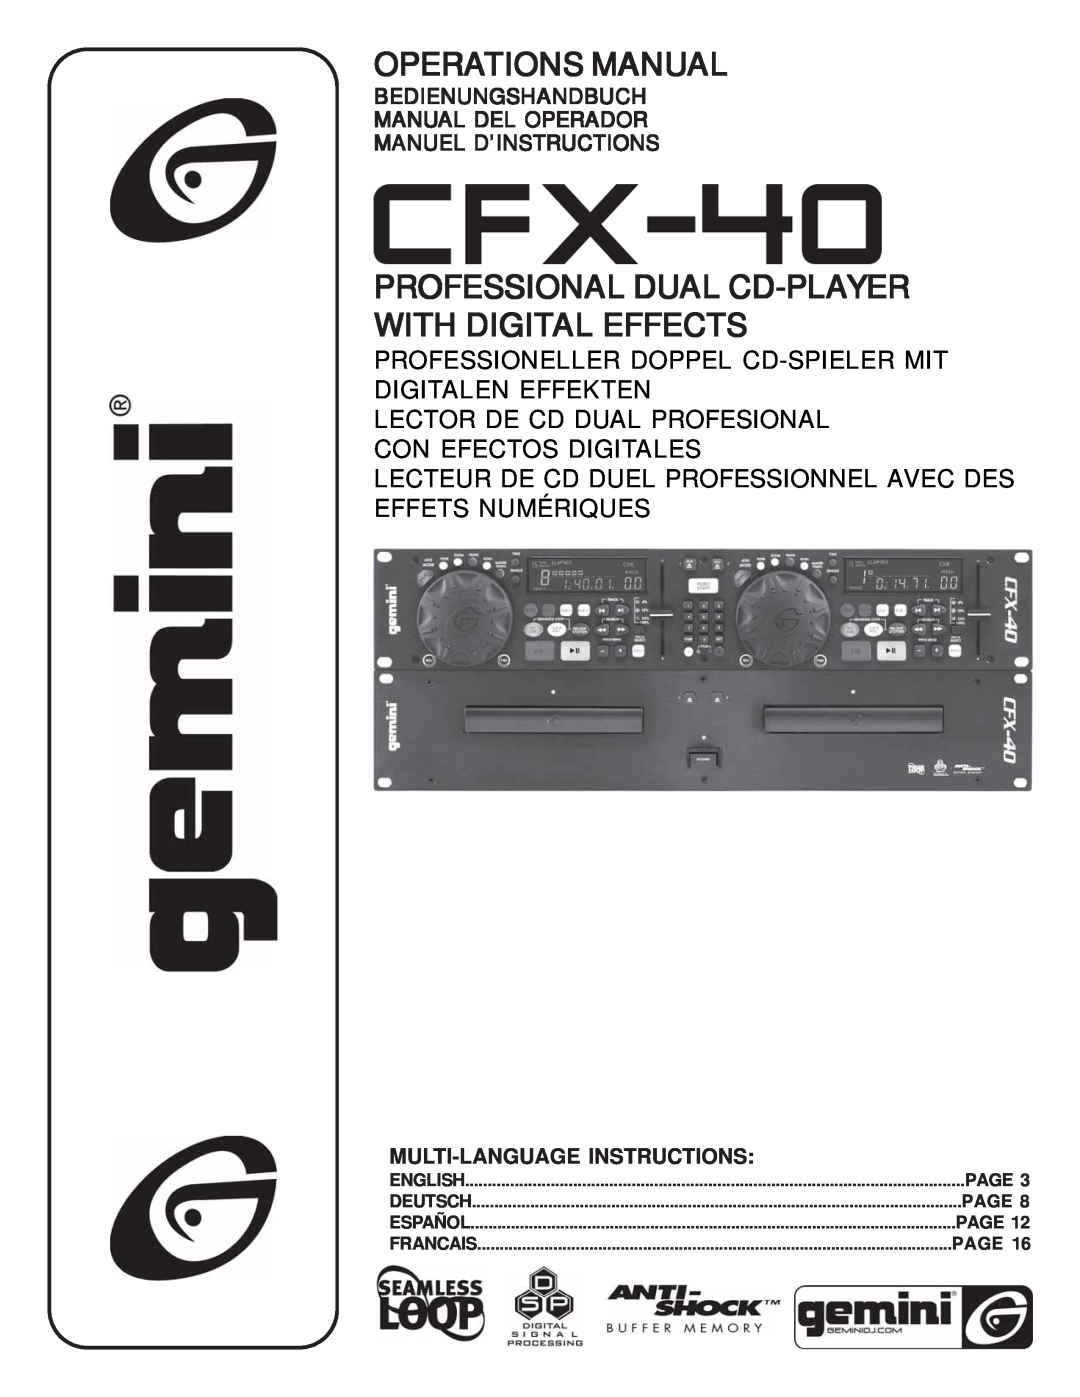 Gemini CFX-40 manual Operations Manual, Professional Dual Cd-Playerwith Digital Effects 